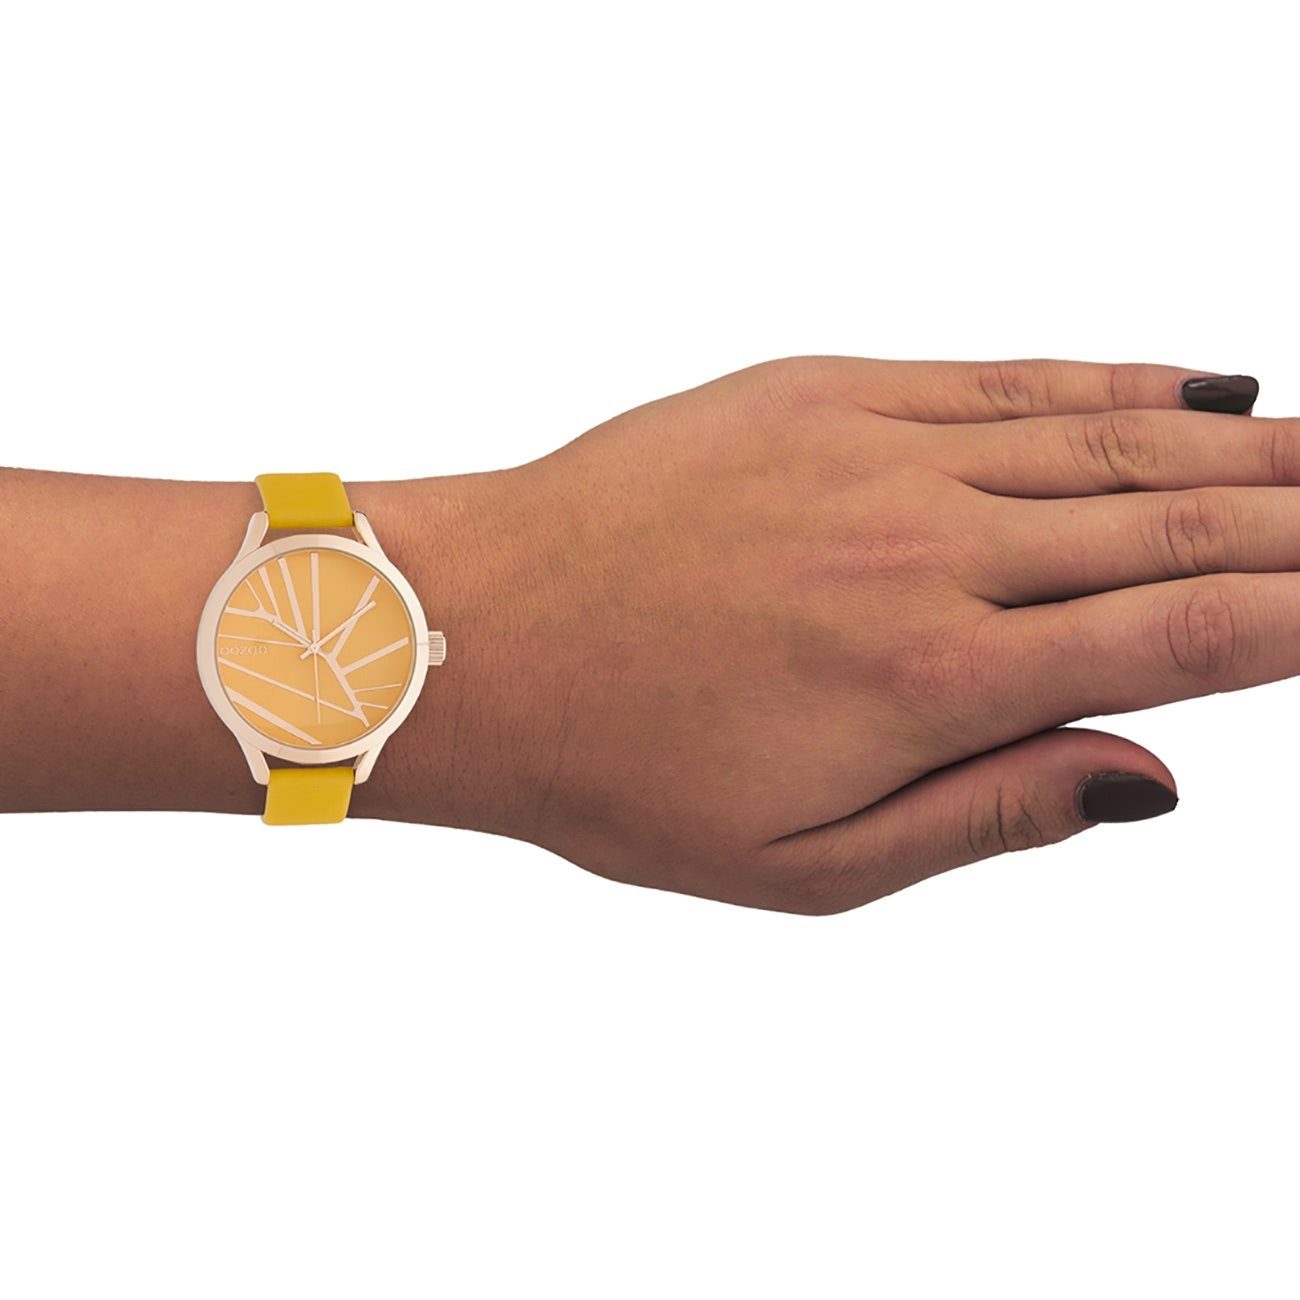 Damenuhr gelb, Fashion Quarzuhr Armbanduhr rund, Oozoo OOZOO (ca. Damen Lederarmband 43mm), groß Timepieces, OOZOO